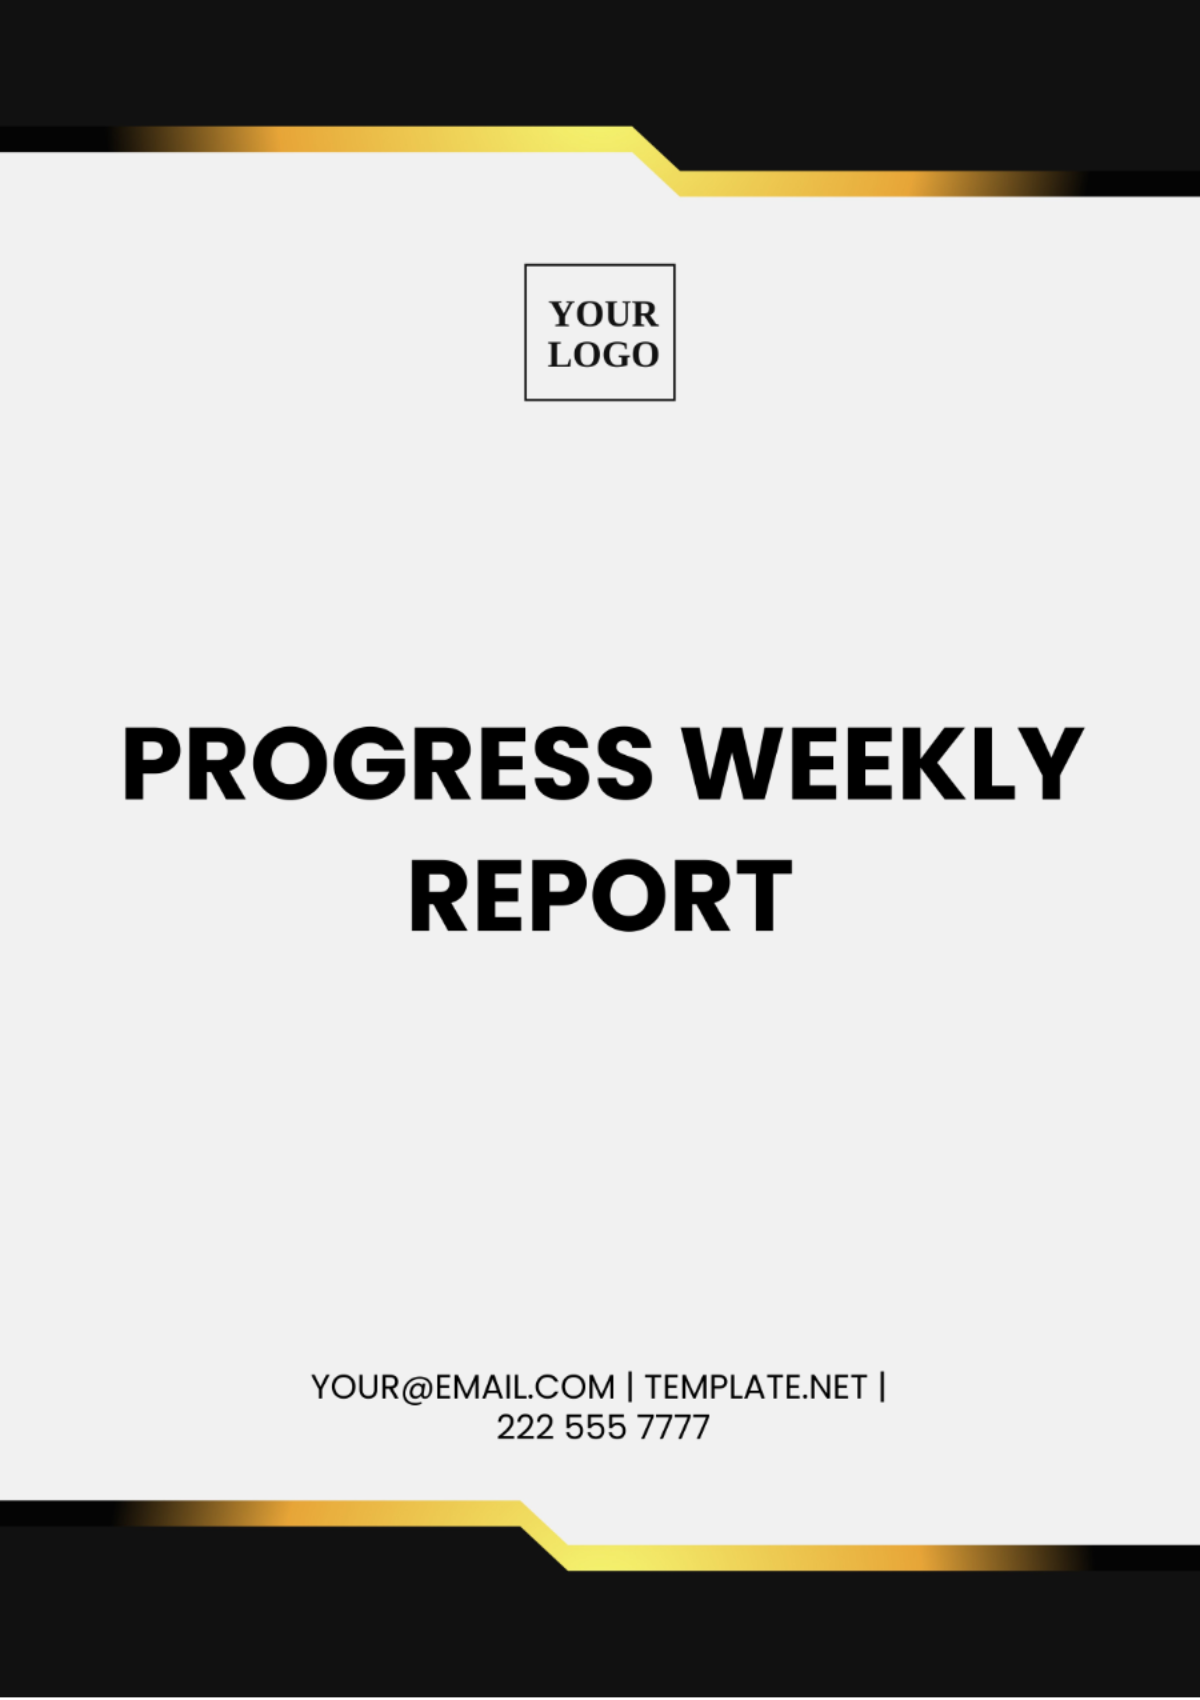 Progress Weekly Report Template